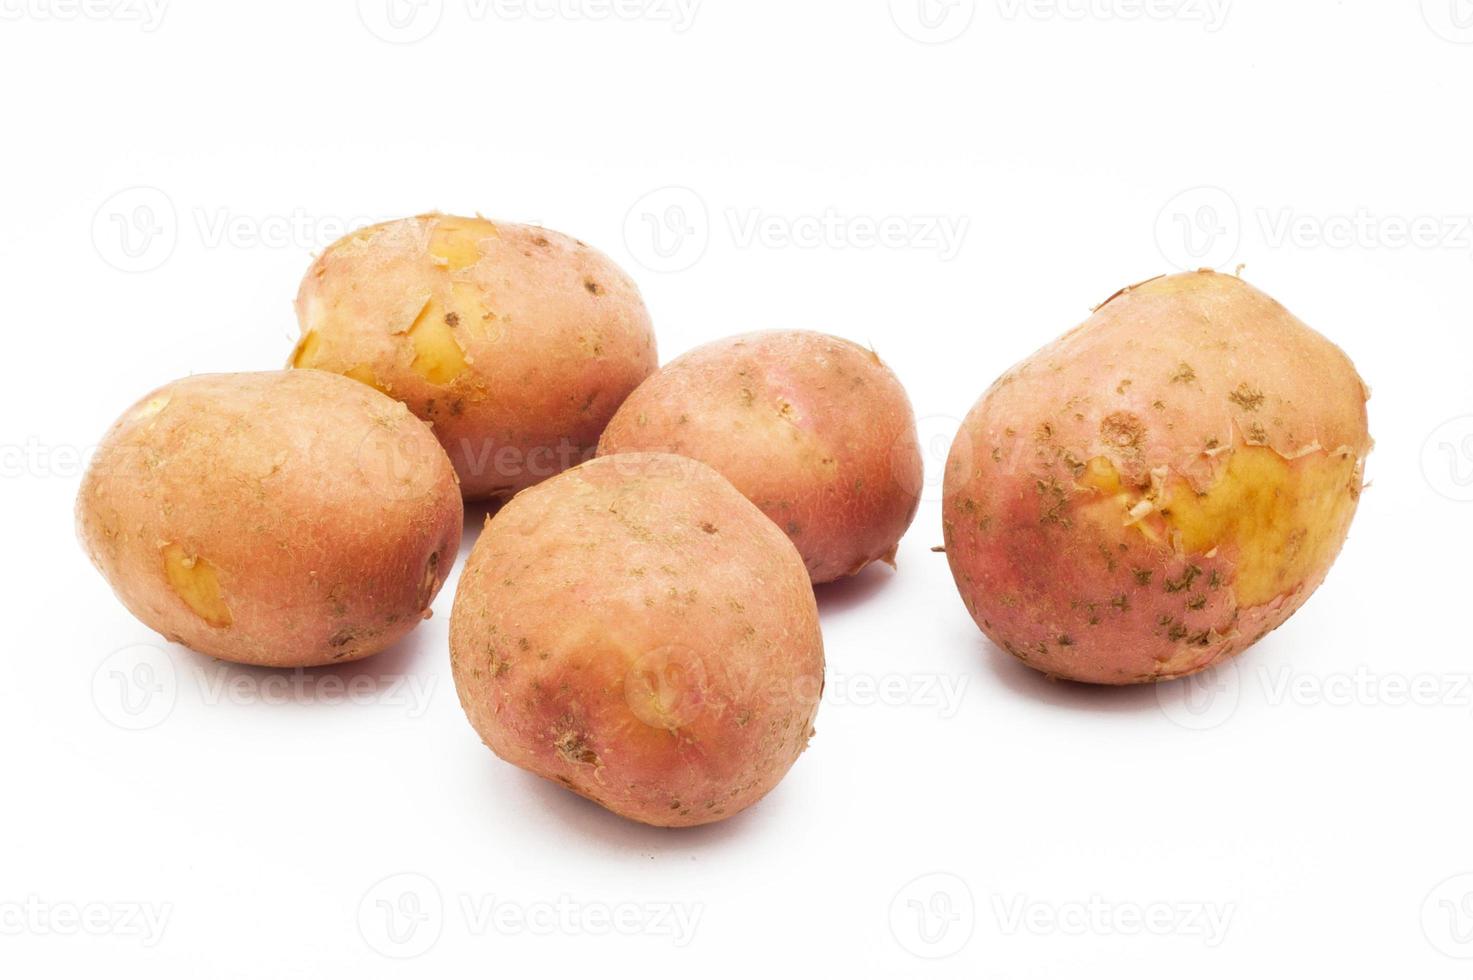 kuroda potatissorter. potatis isolerad på vit bakgrund foto